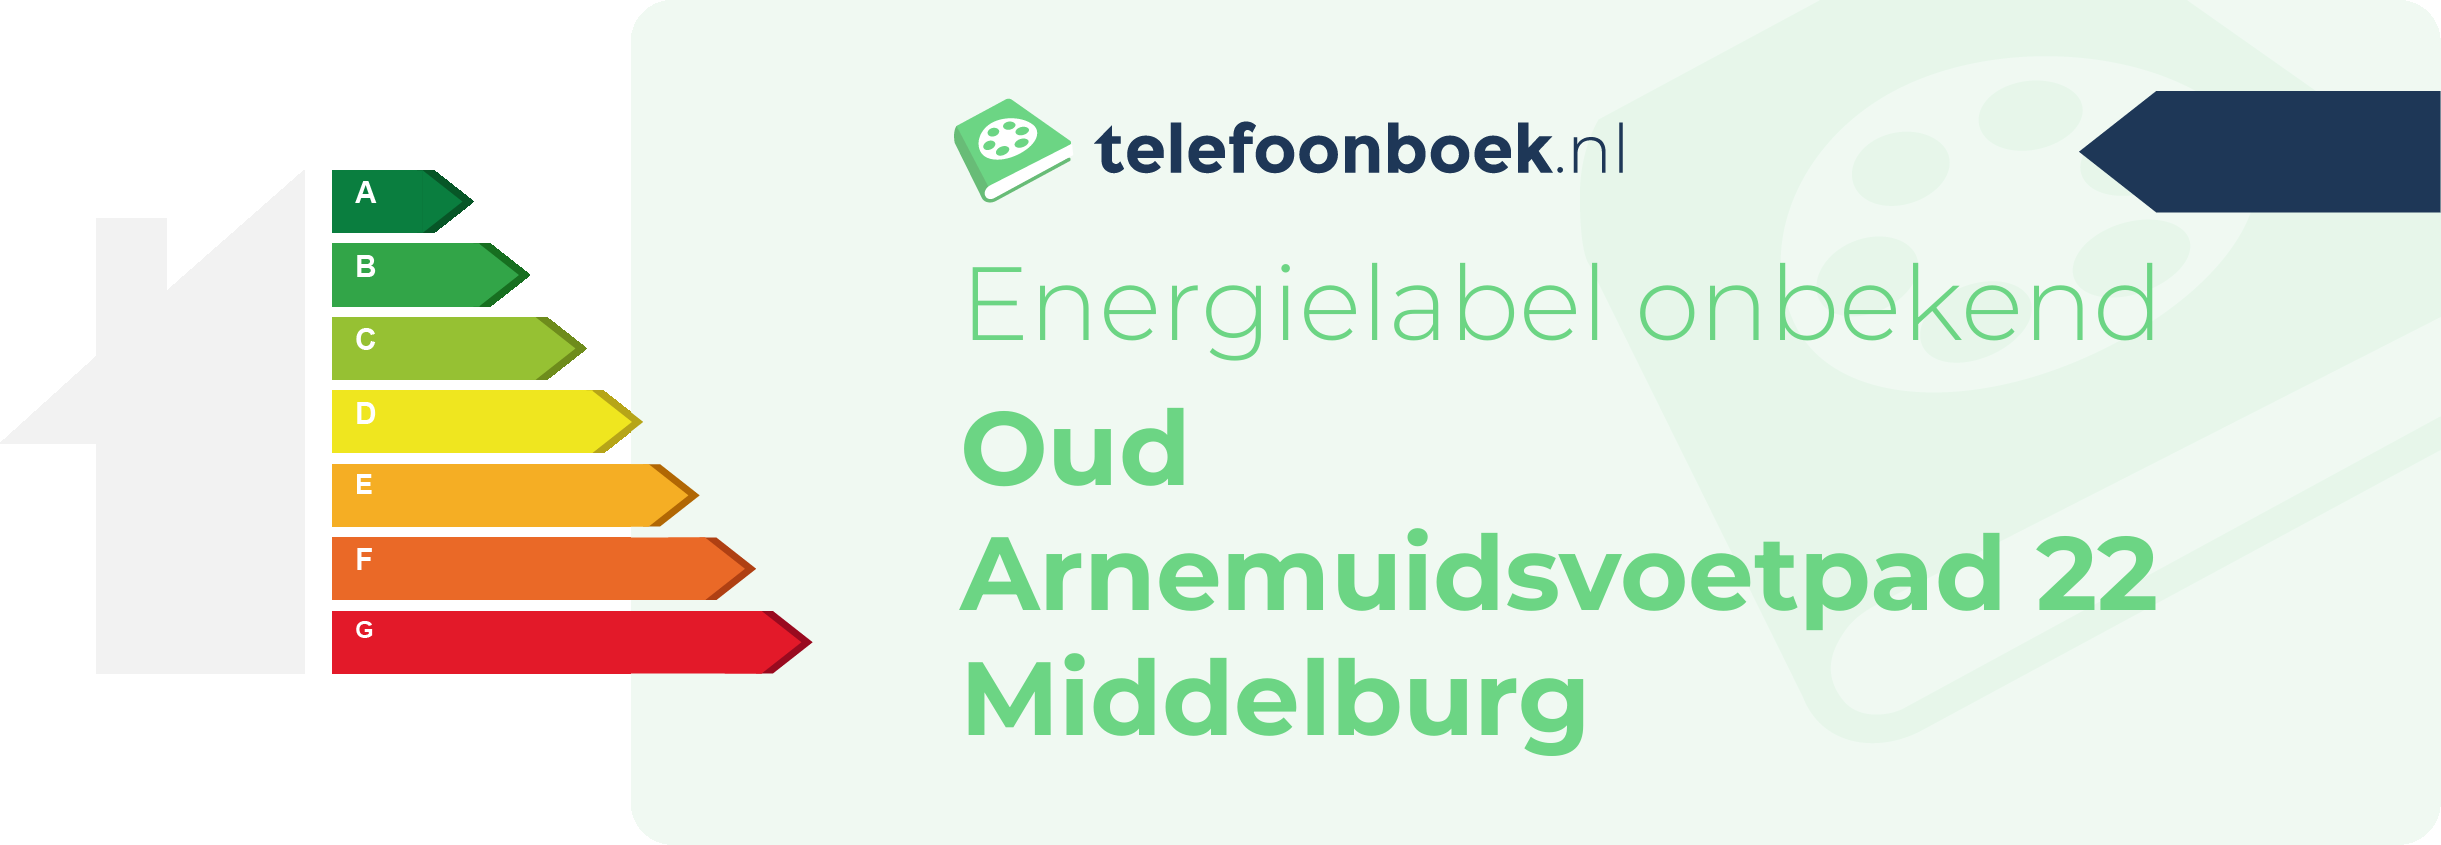 Energielabel Oud Arnemuidsvoetpad 22 Middelburg